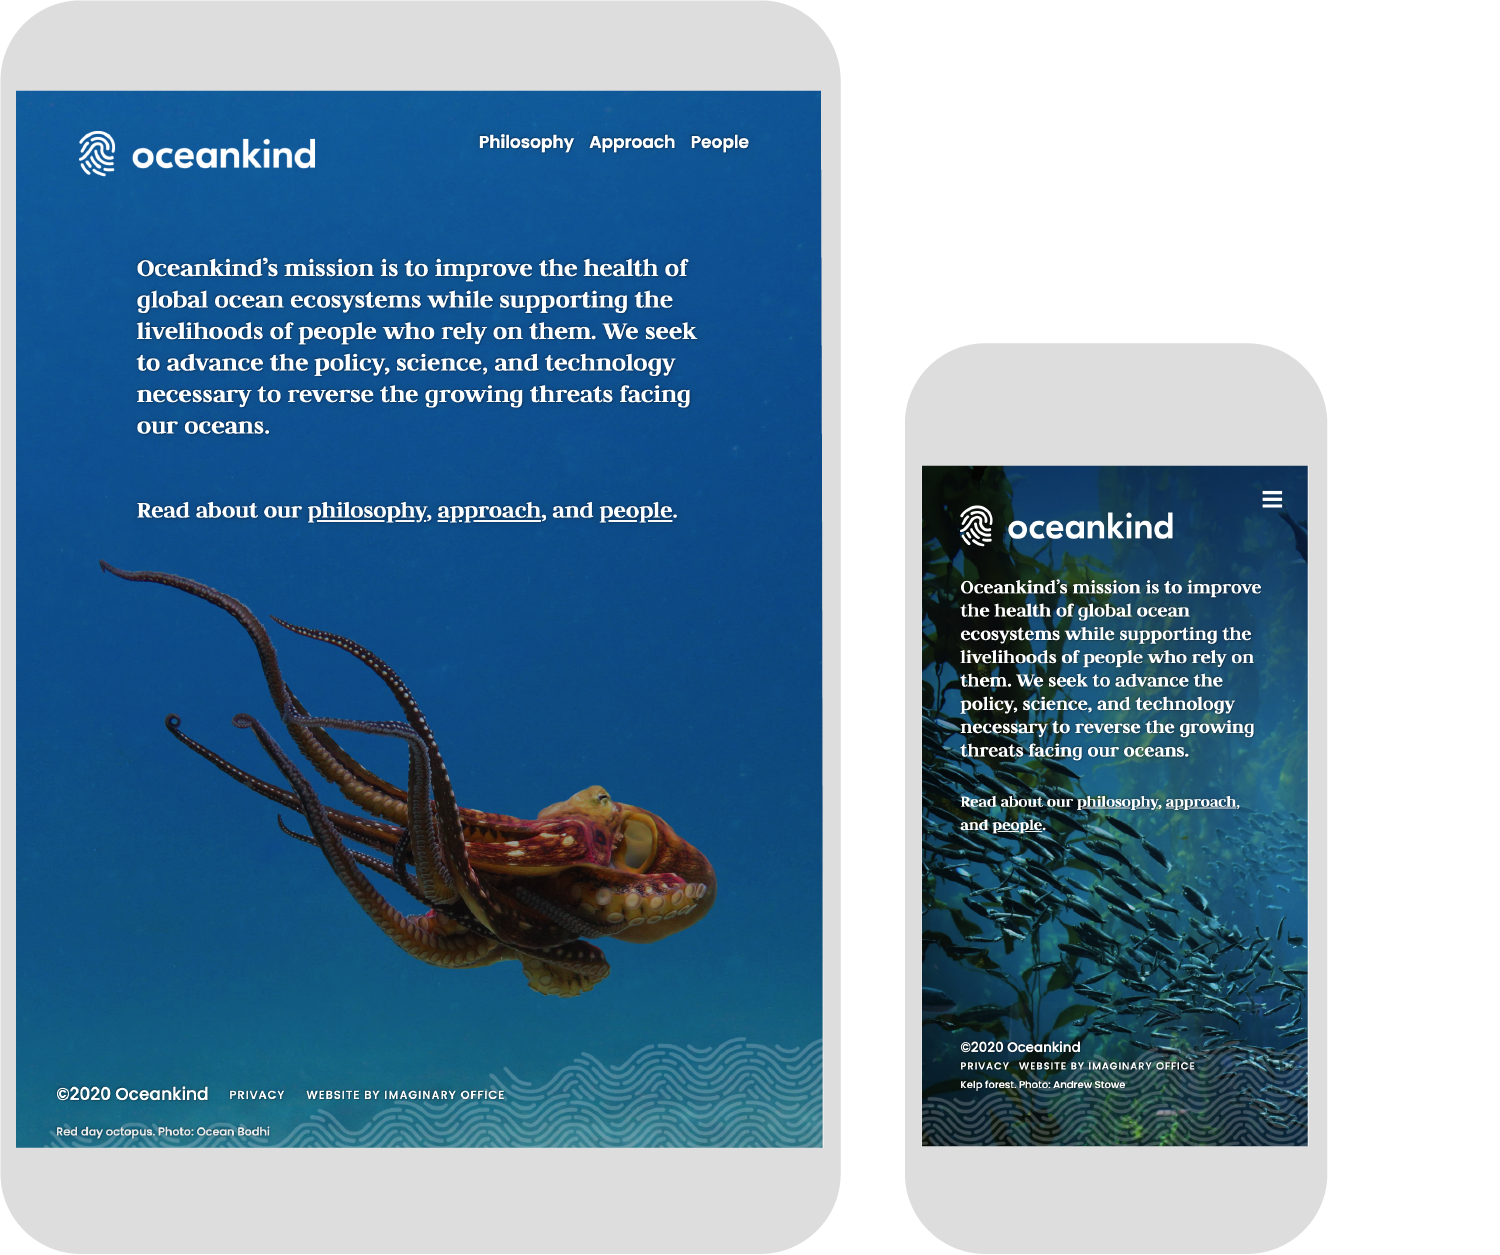 Oceankind website mobile view